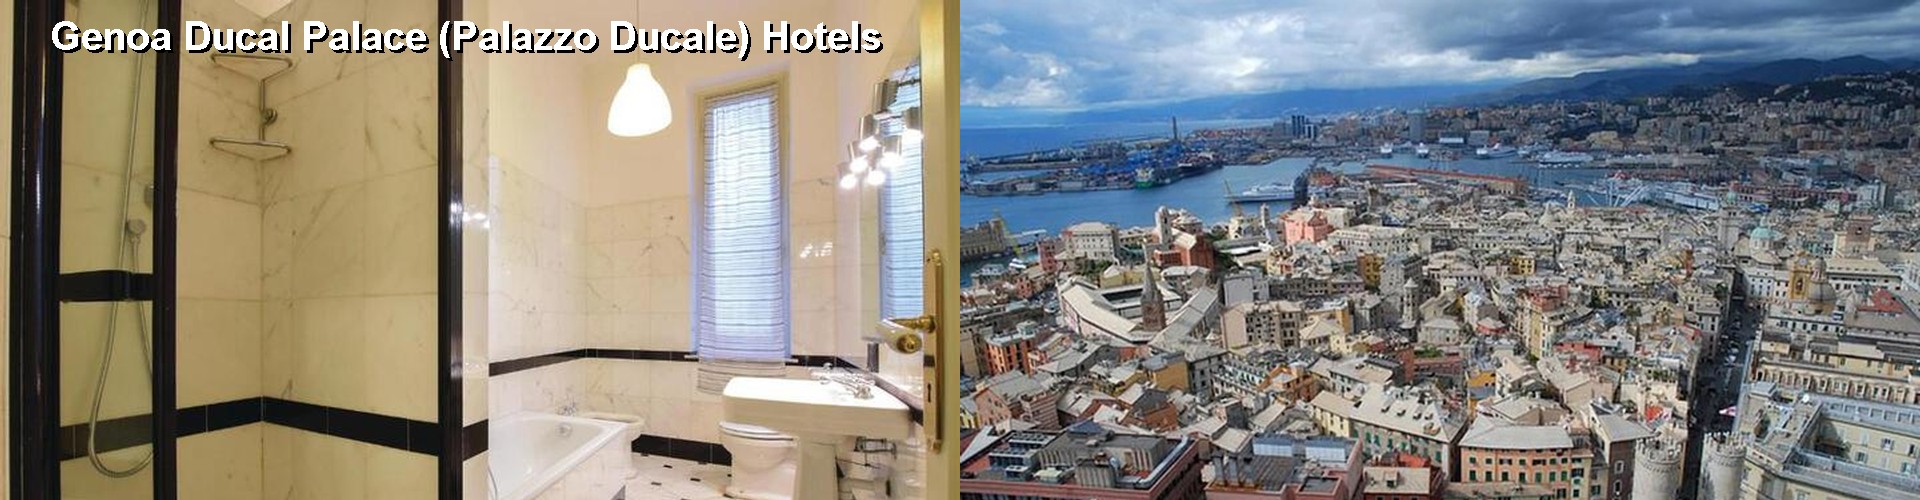 5 Best Hotels near Genoa Ducal Palace (Palazzo Ducale)